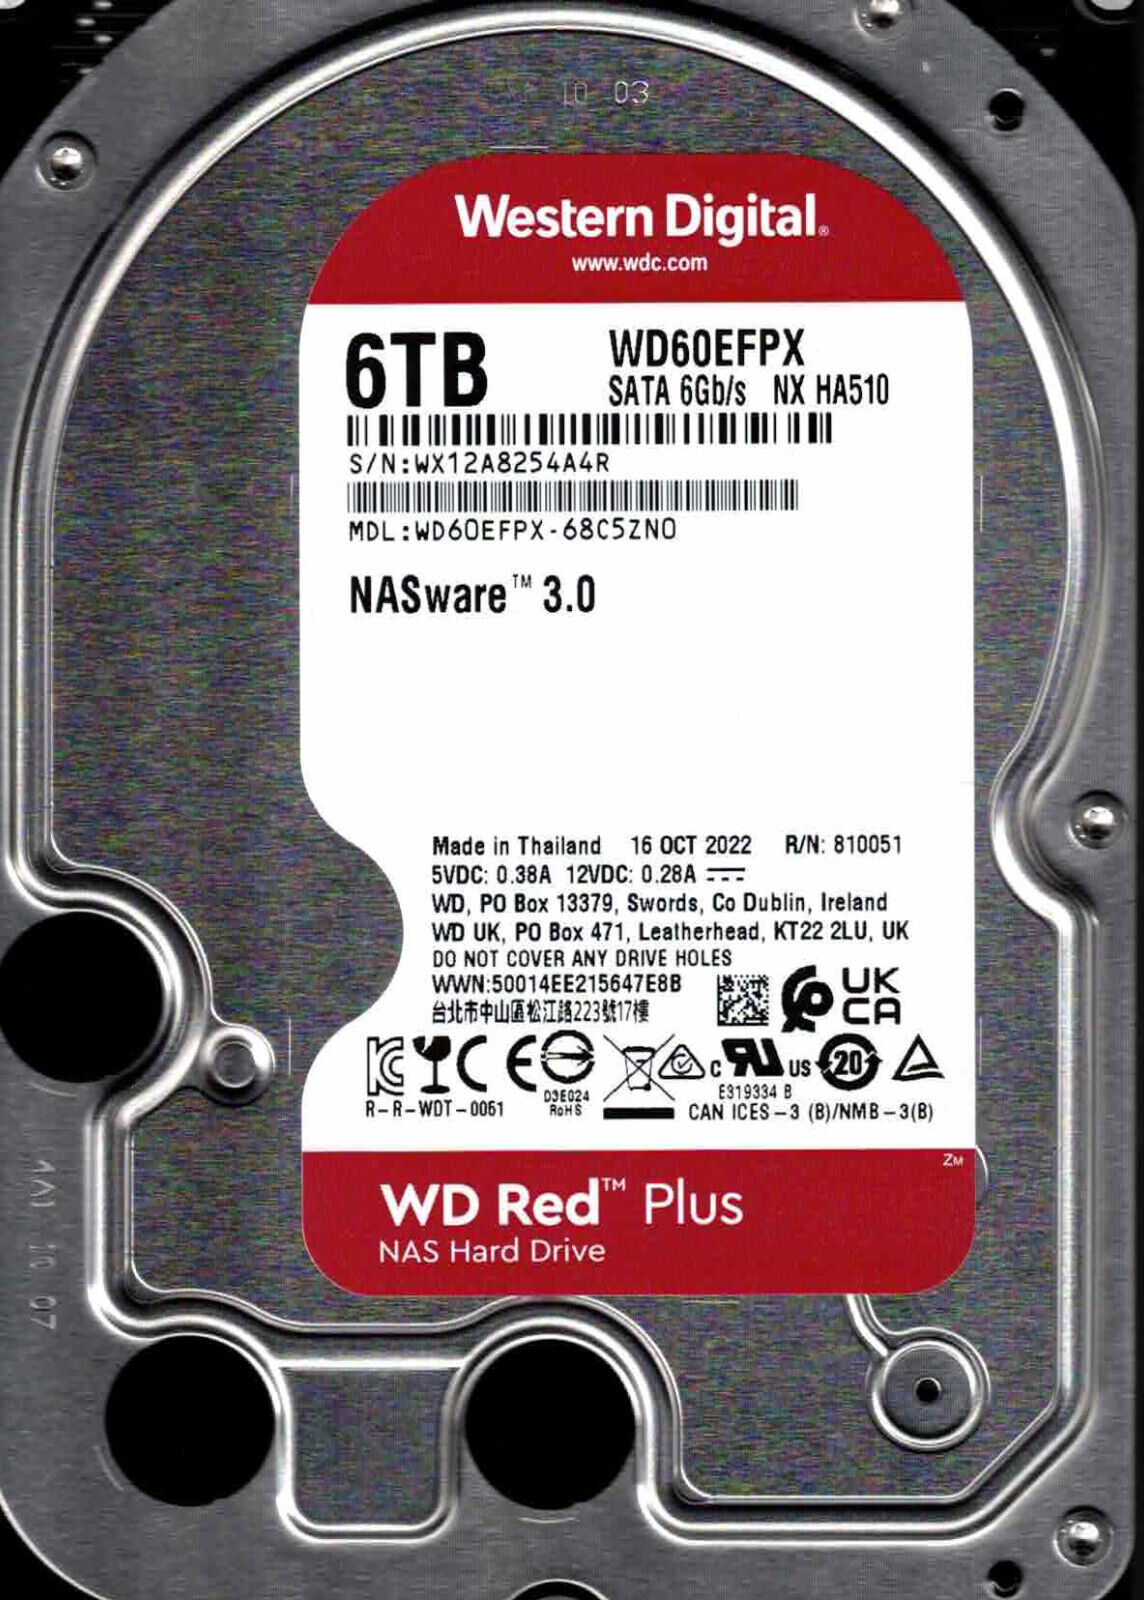 WD Red Plus 6TB NAS Hard Drive - 5400 RPM Class SATA 6Gb/s, CMR, 128MB Cache, 3.5 Inch - WD60EFPX